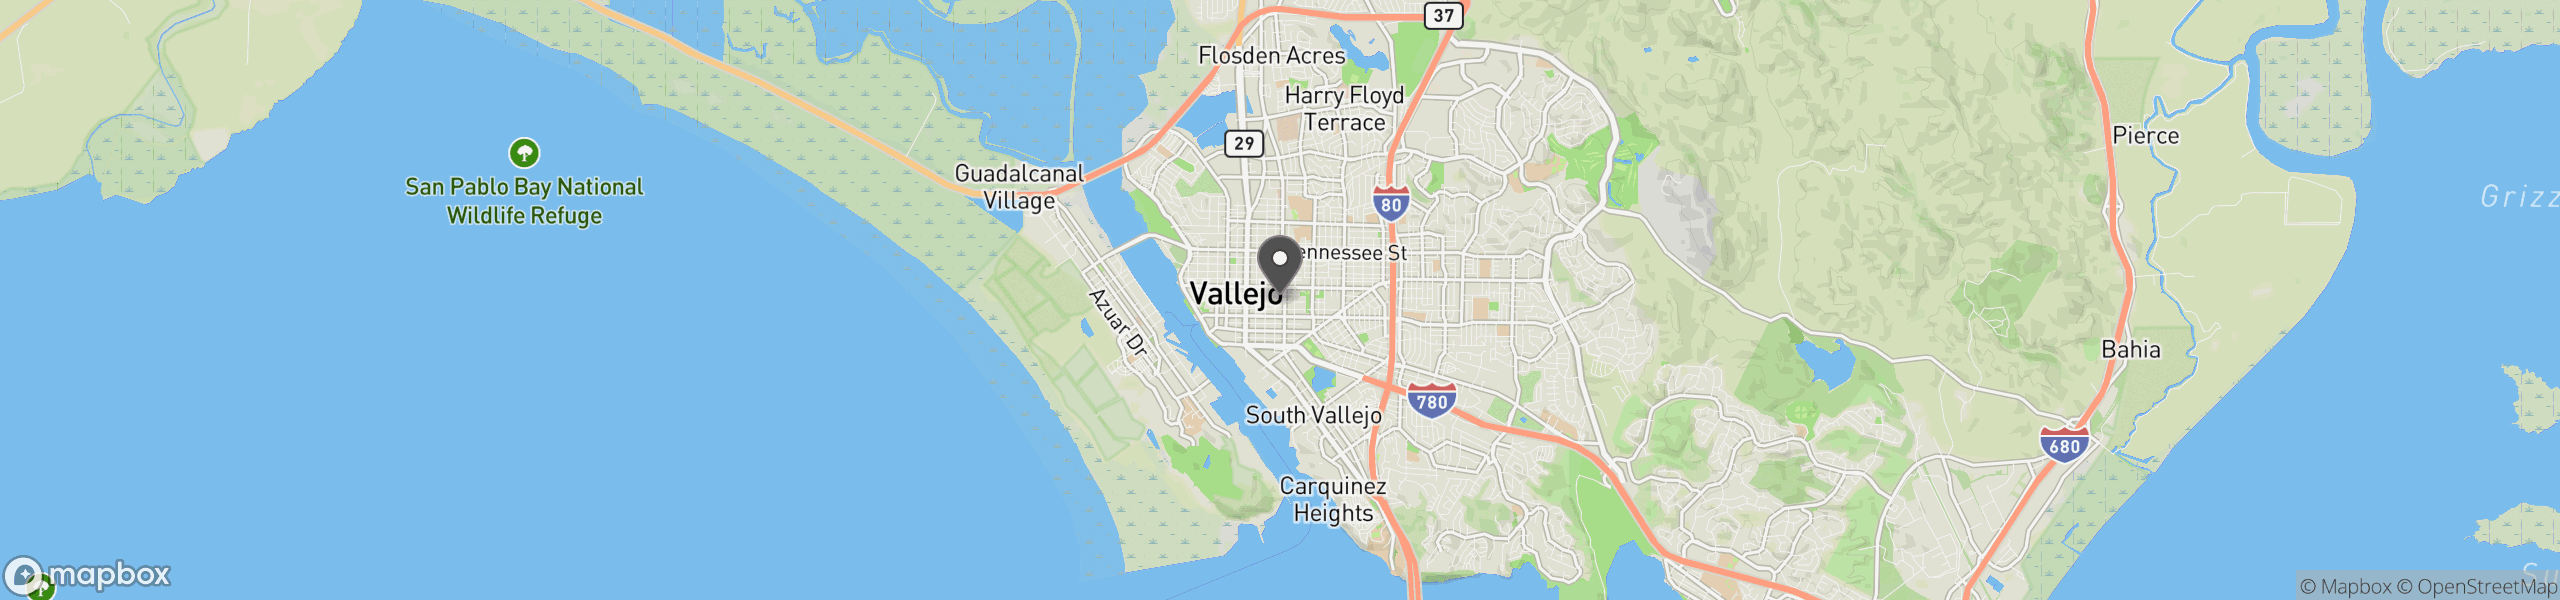 Vallejo, CA 94590